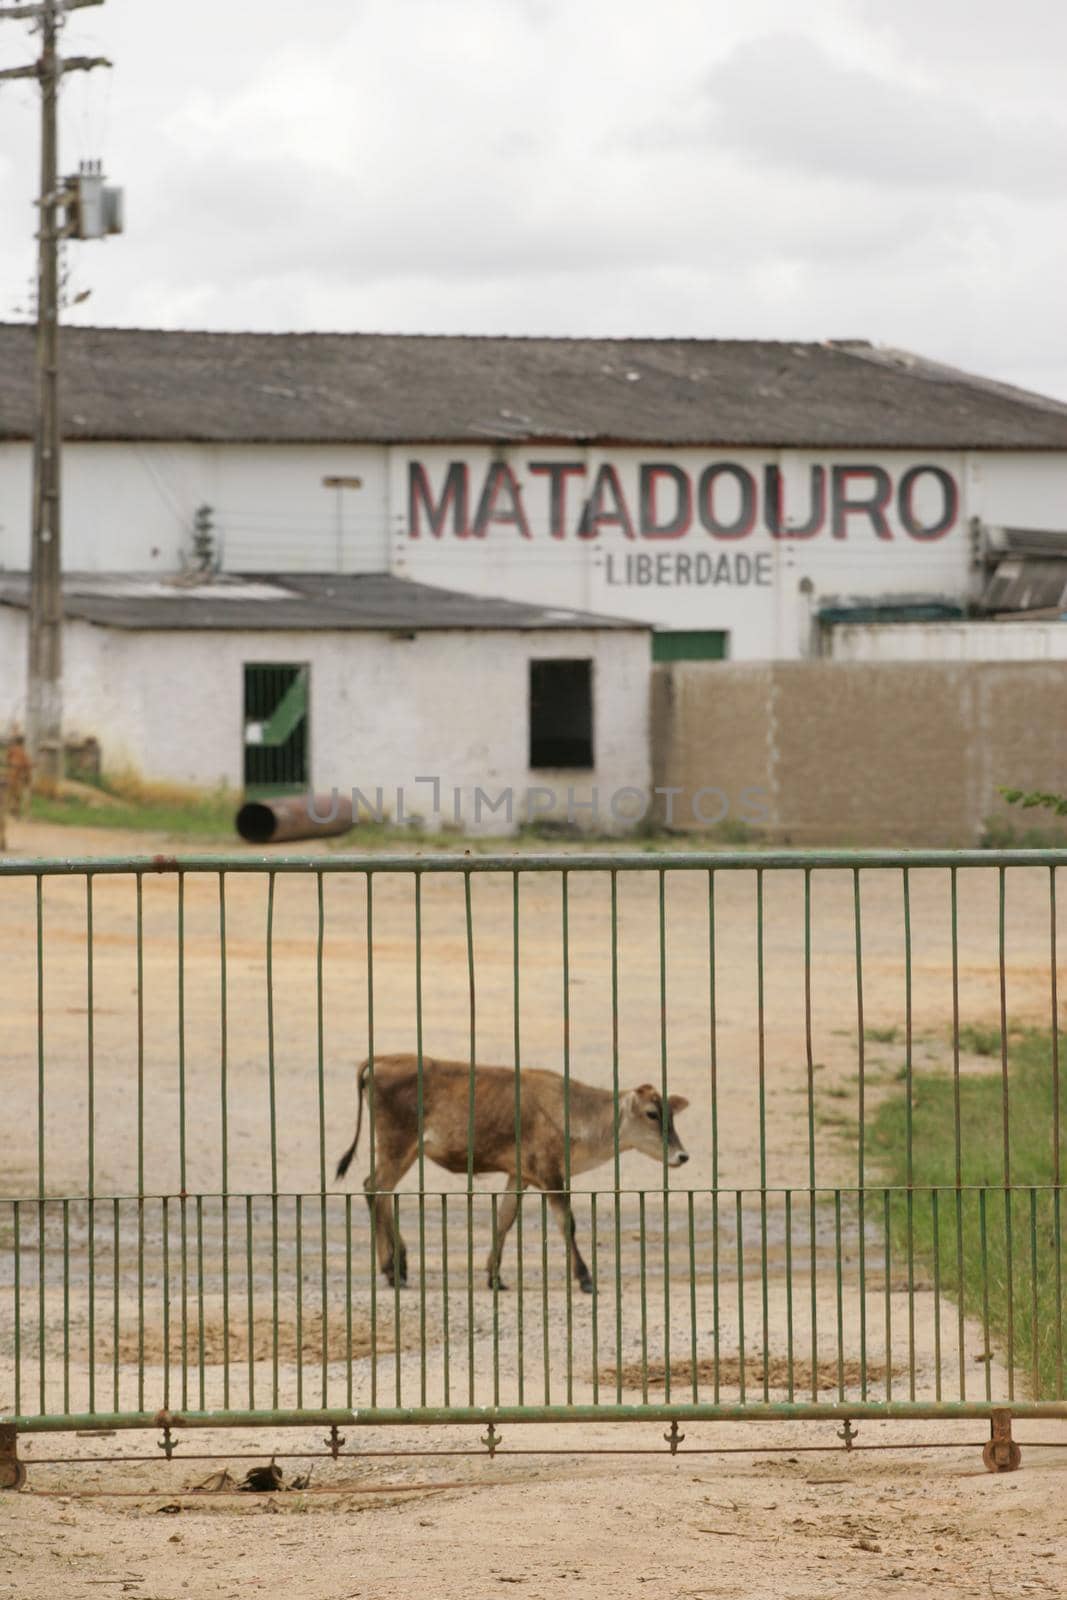 itamaraju, bahia, brazil - october 6, 2009: view of animal slaughterhouse in the city of Itamaraju.